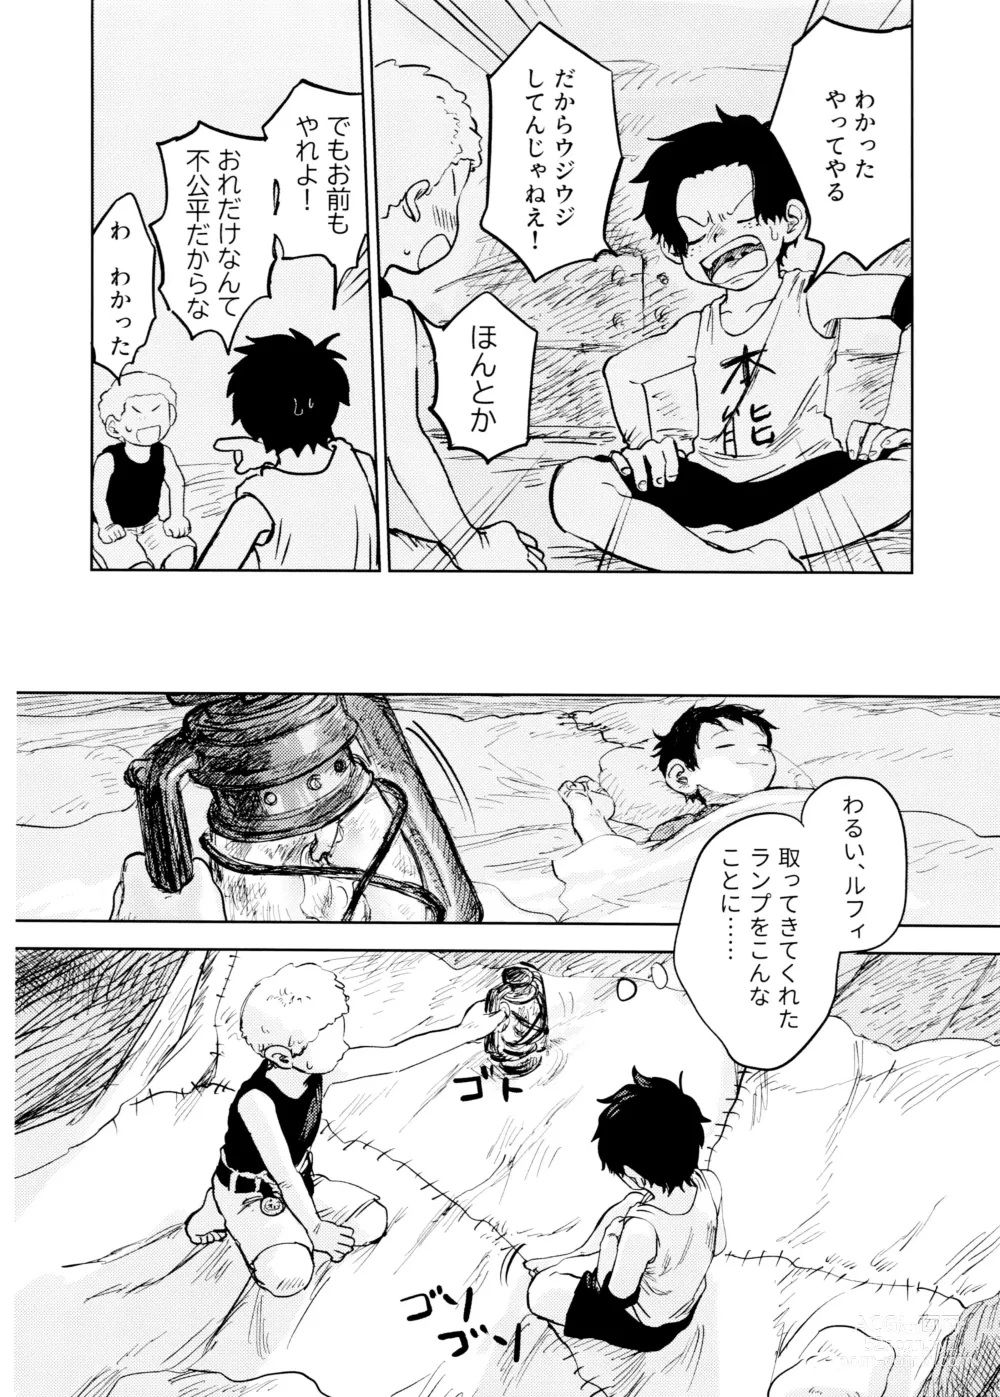 Page 31 of doujinshi Himitsu no Colubo Yama